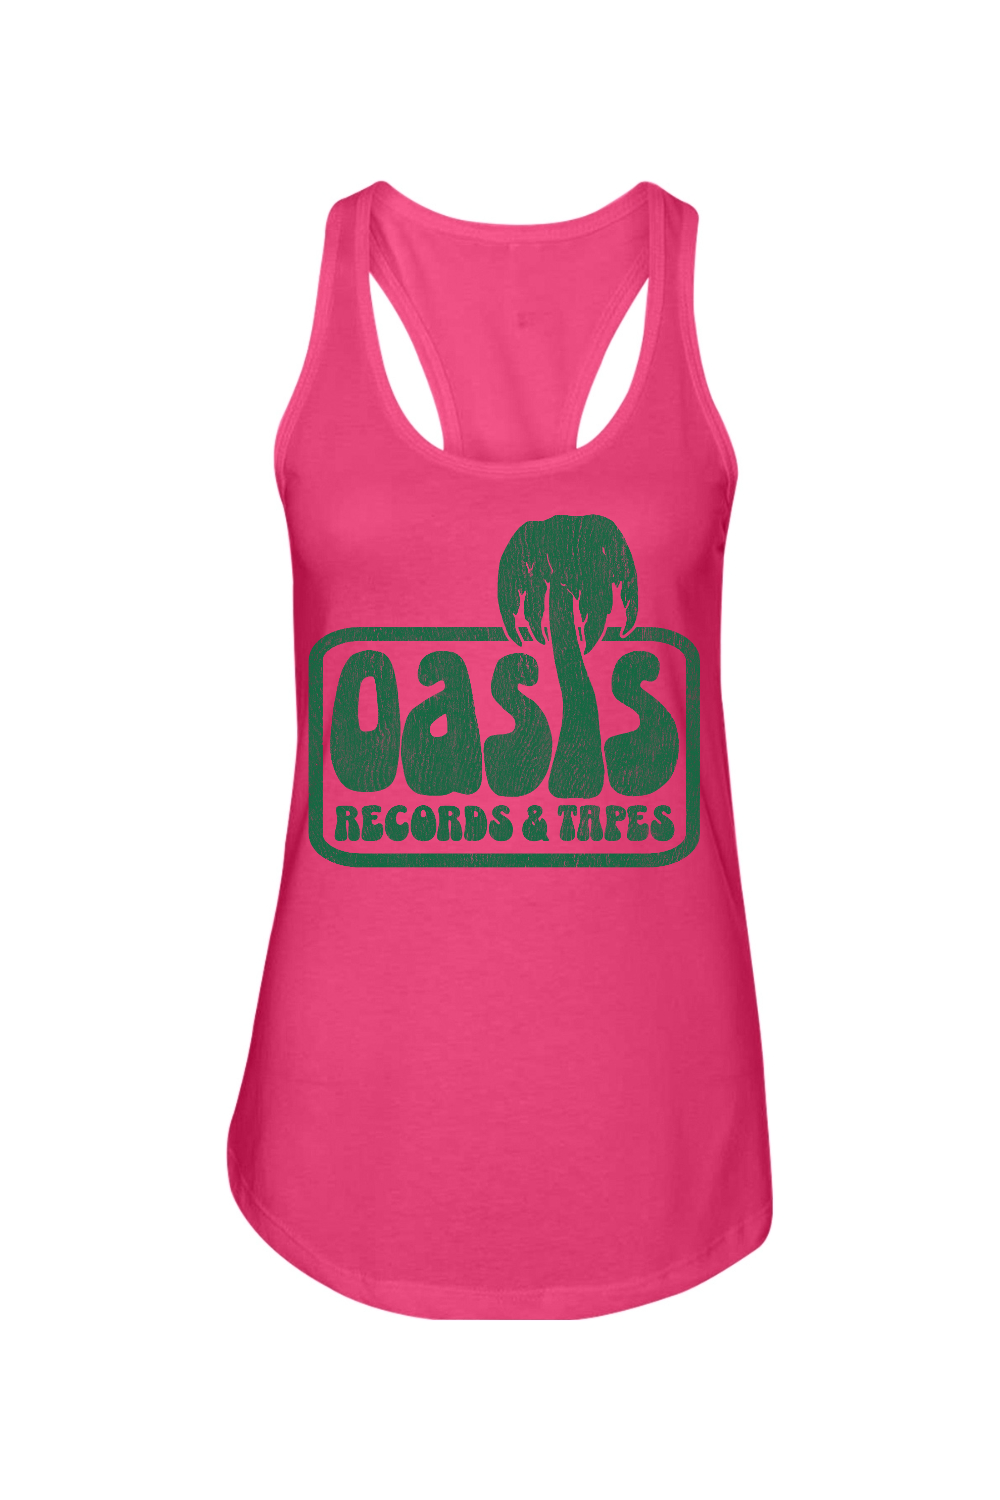 Oasis Records & Tapes - Ladies Racerback Tank - Yinzylvania